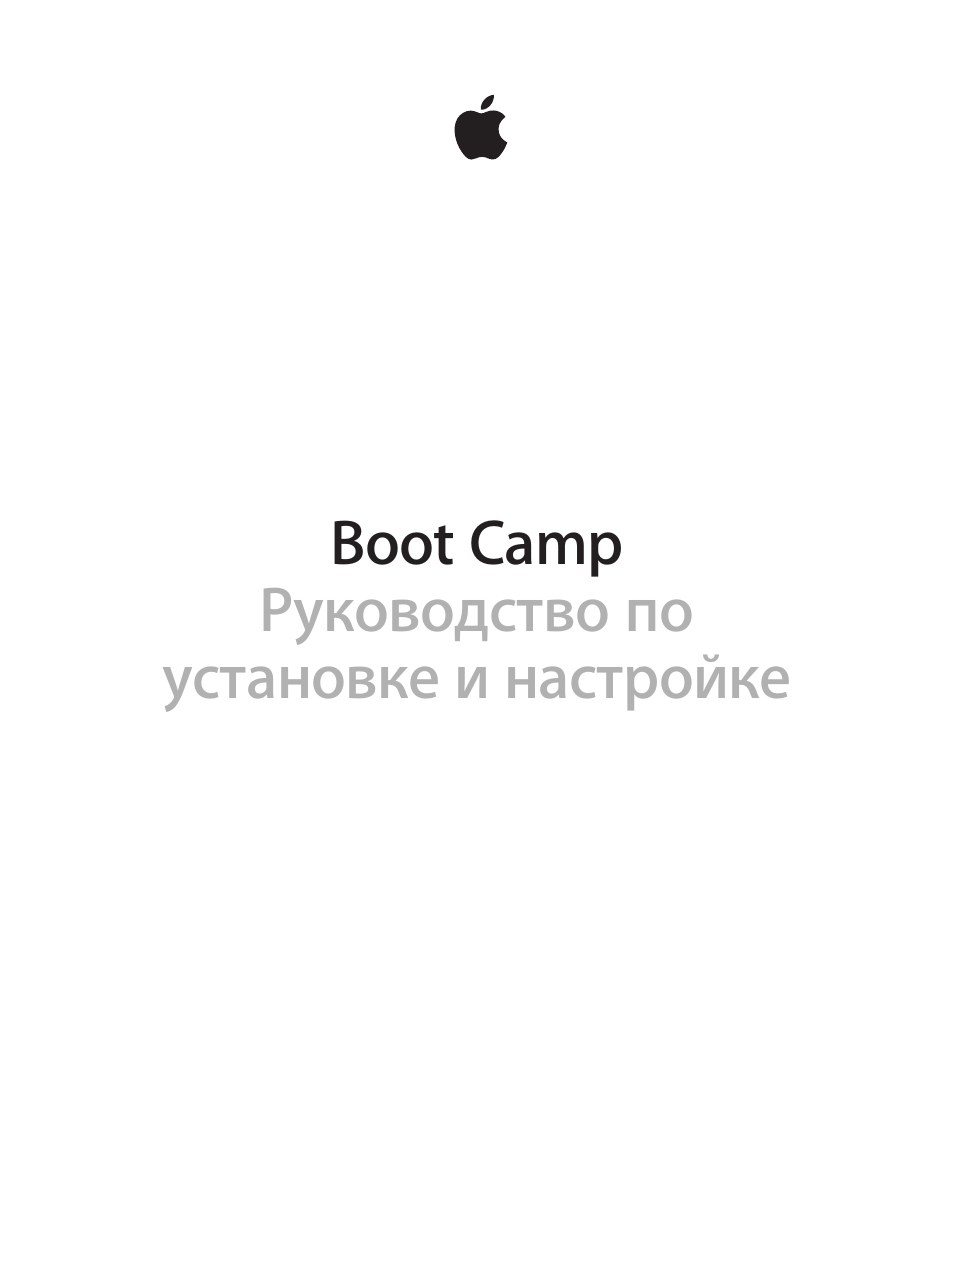 Инструкция по эксплуатации Apple Boot Camp (Mountain Lion) | 11 страниц